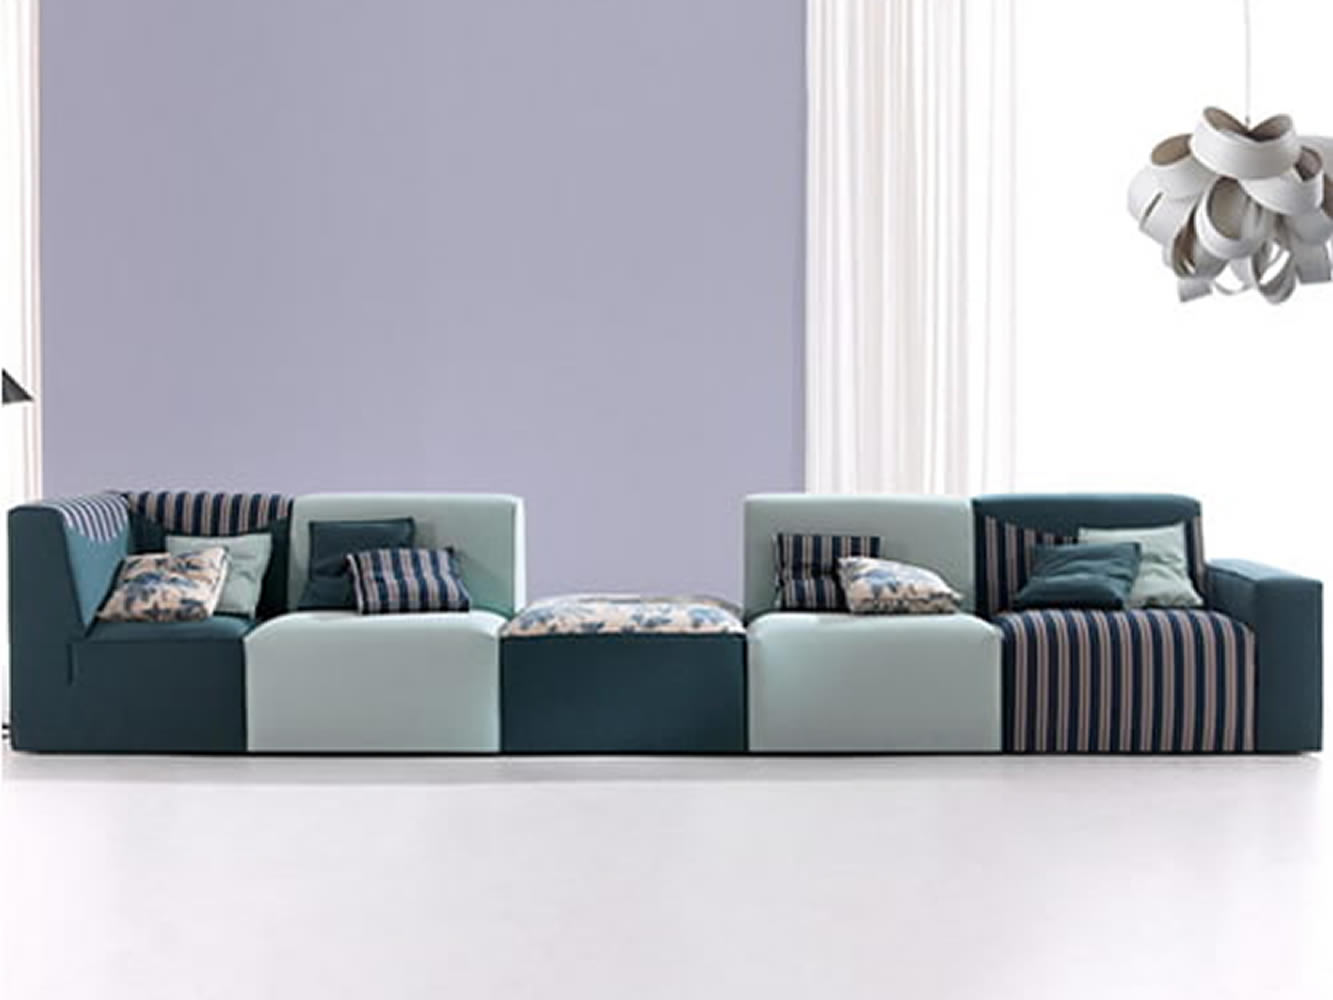 Cool Sofa 2s